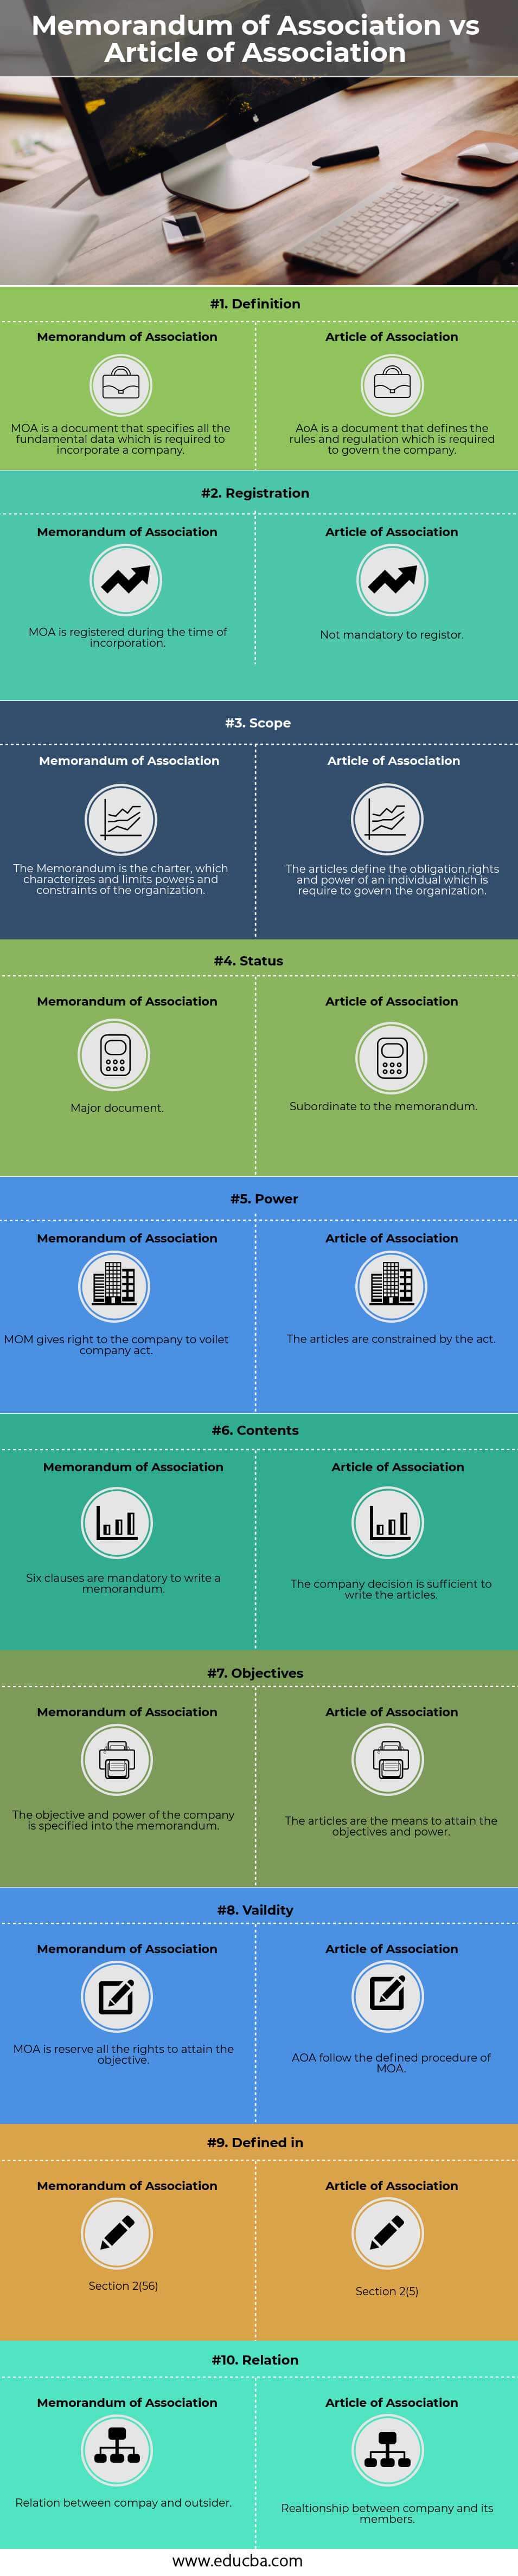 Memorandum of Associatio vs Article of Association(info)